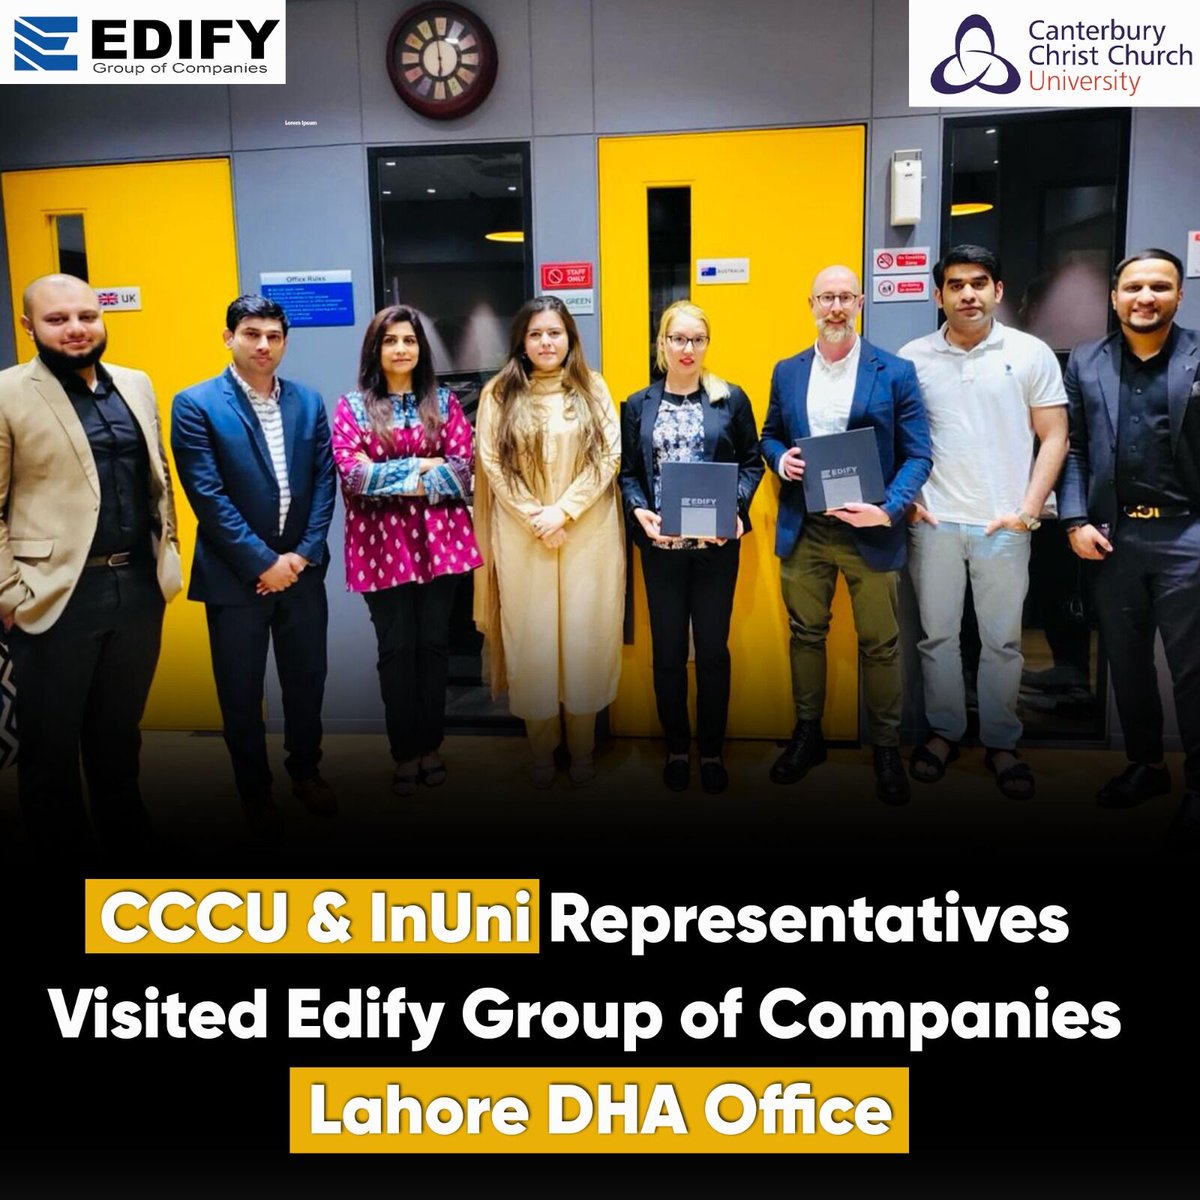 CCCU & InUni Representatives Visited Edify Group of Companies Lahore DHA Office.
.
#inuni #cccu #cccuuk #ukstudyvisa #uk #ukvisa #ukeducation #studyuk #ukuniversities #london #internationalstudentsinuk #ukscholarships #studyvisa #abroad #studyoverseas #edify #edifygroup